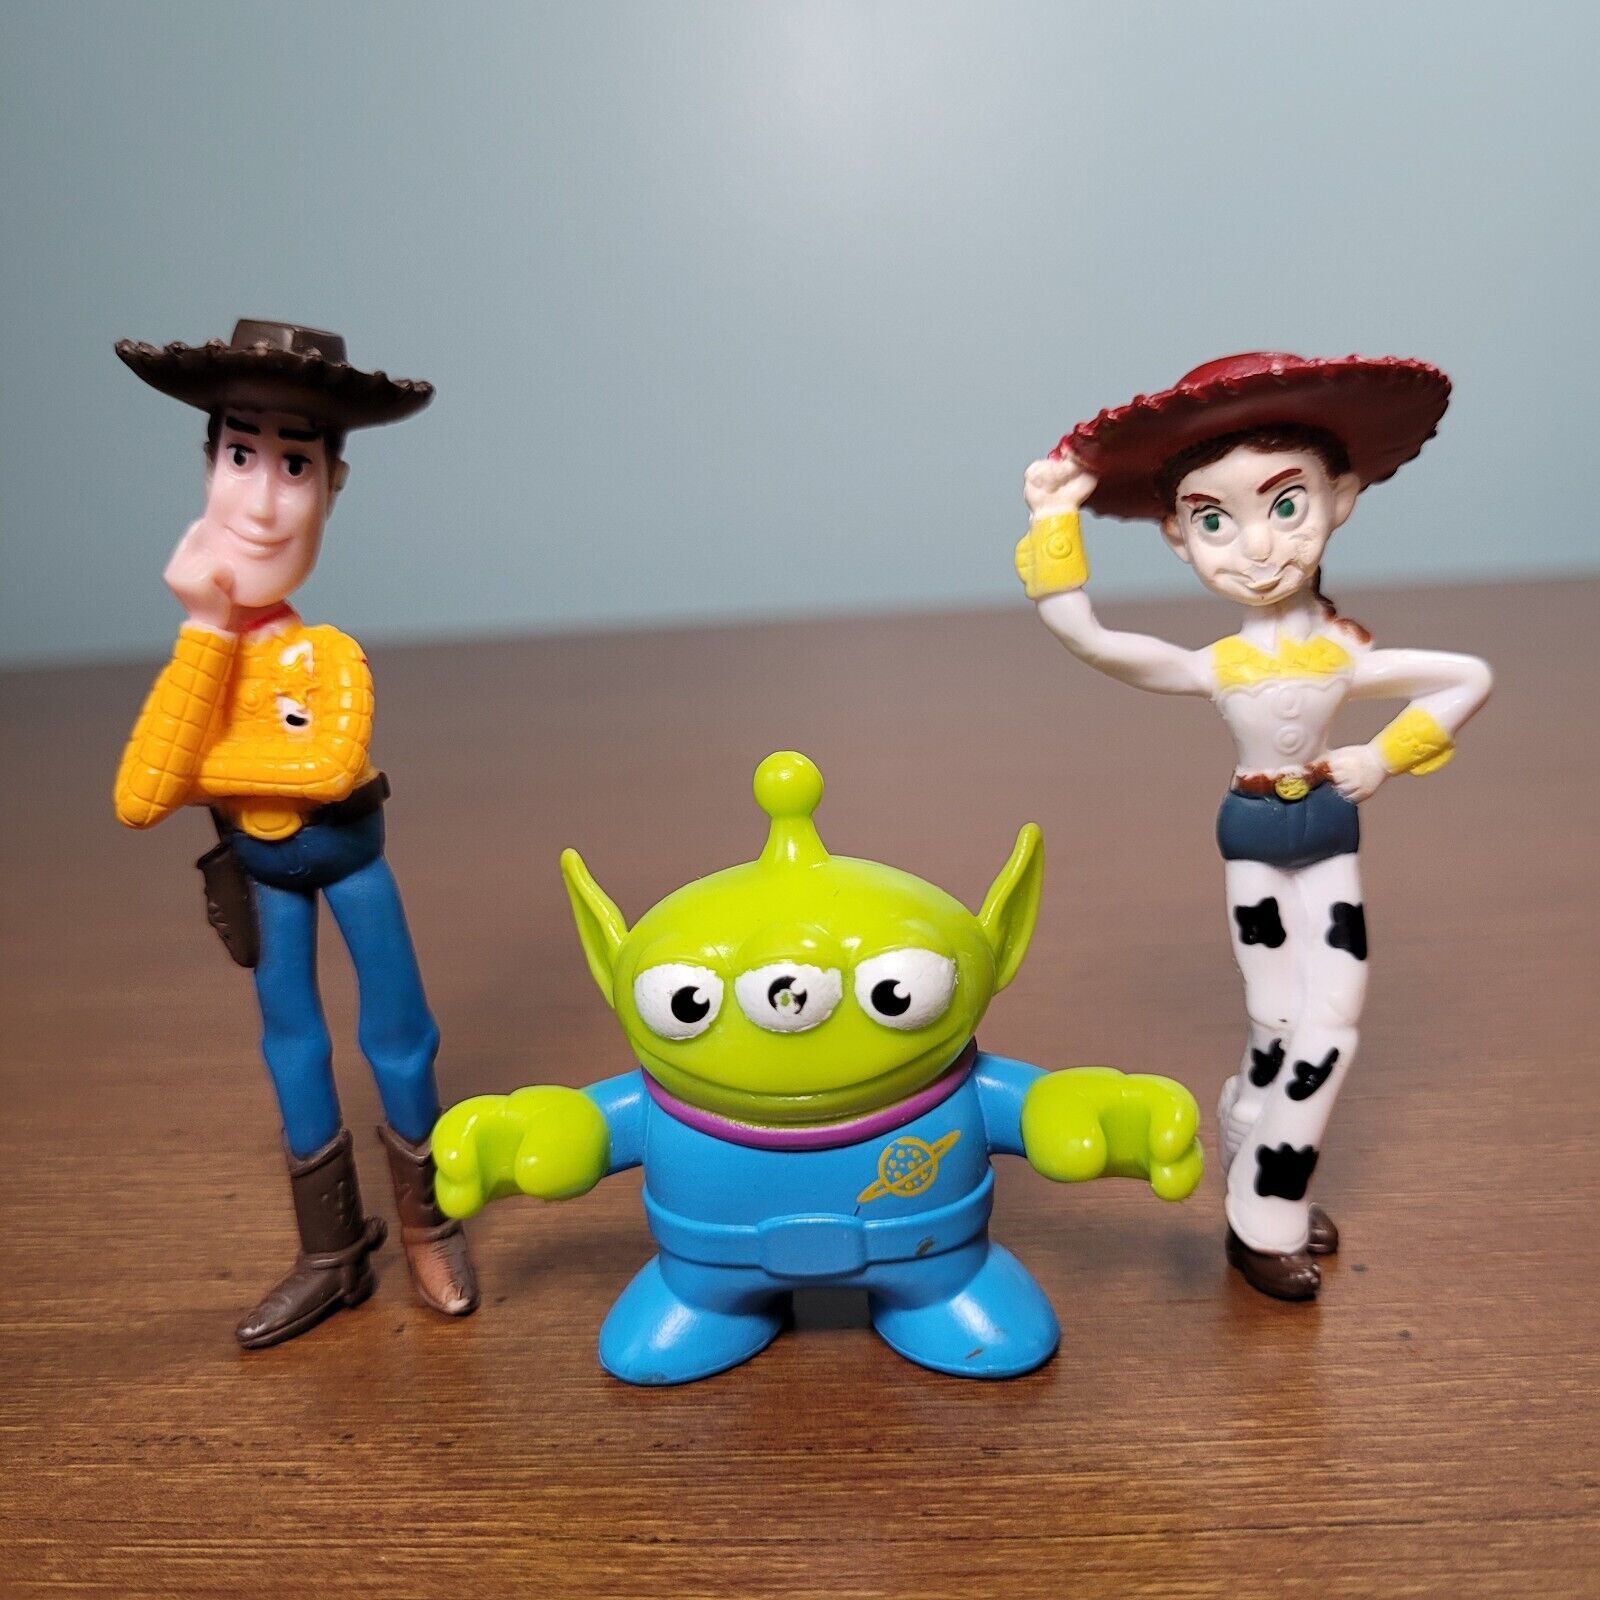 Disney Pixar Toy Story Woody hand on chin Jessie hand on Hat Alien 3 Figures Lot Disney